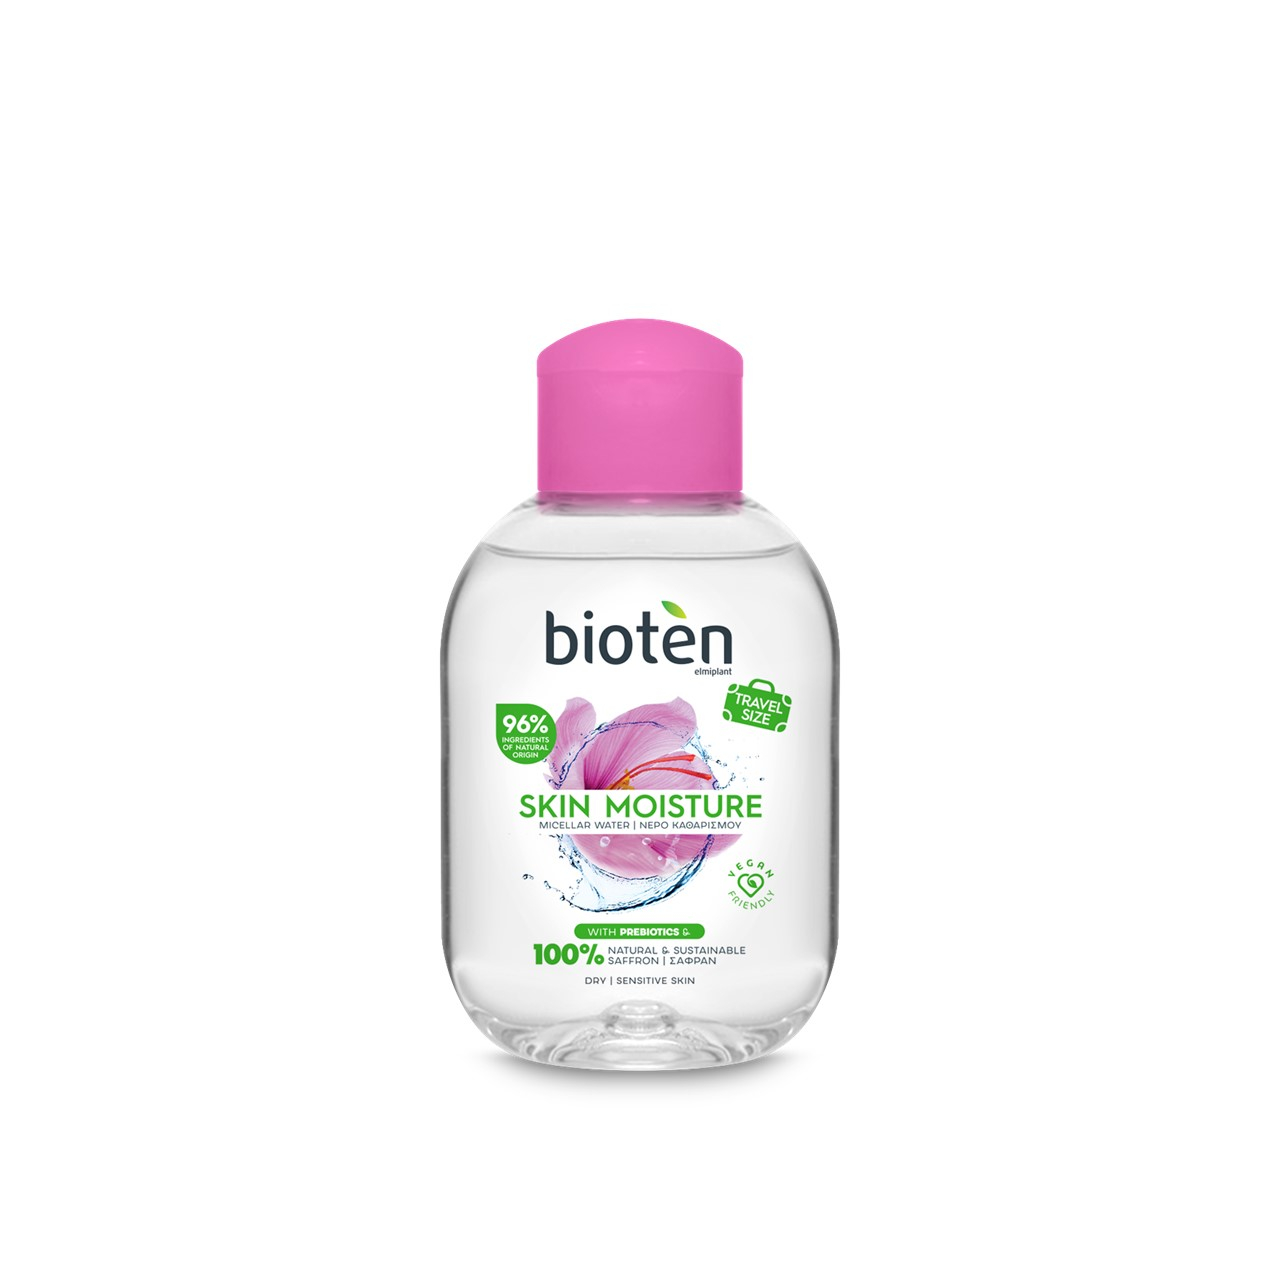 bioten Skin Moisture Micellar Water for Dry/Sensitive Skin 100ml (3.38fl oz)